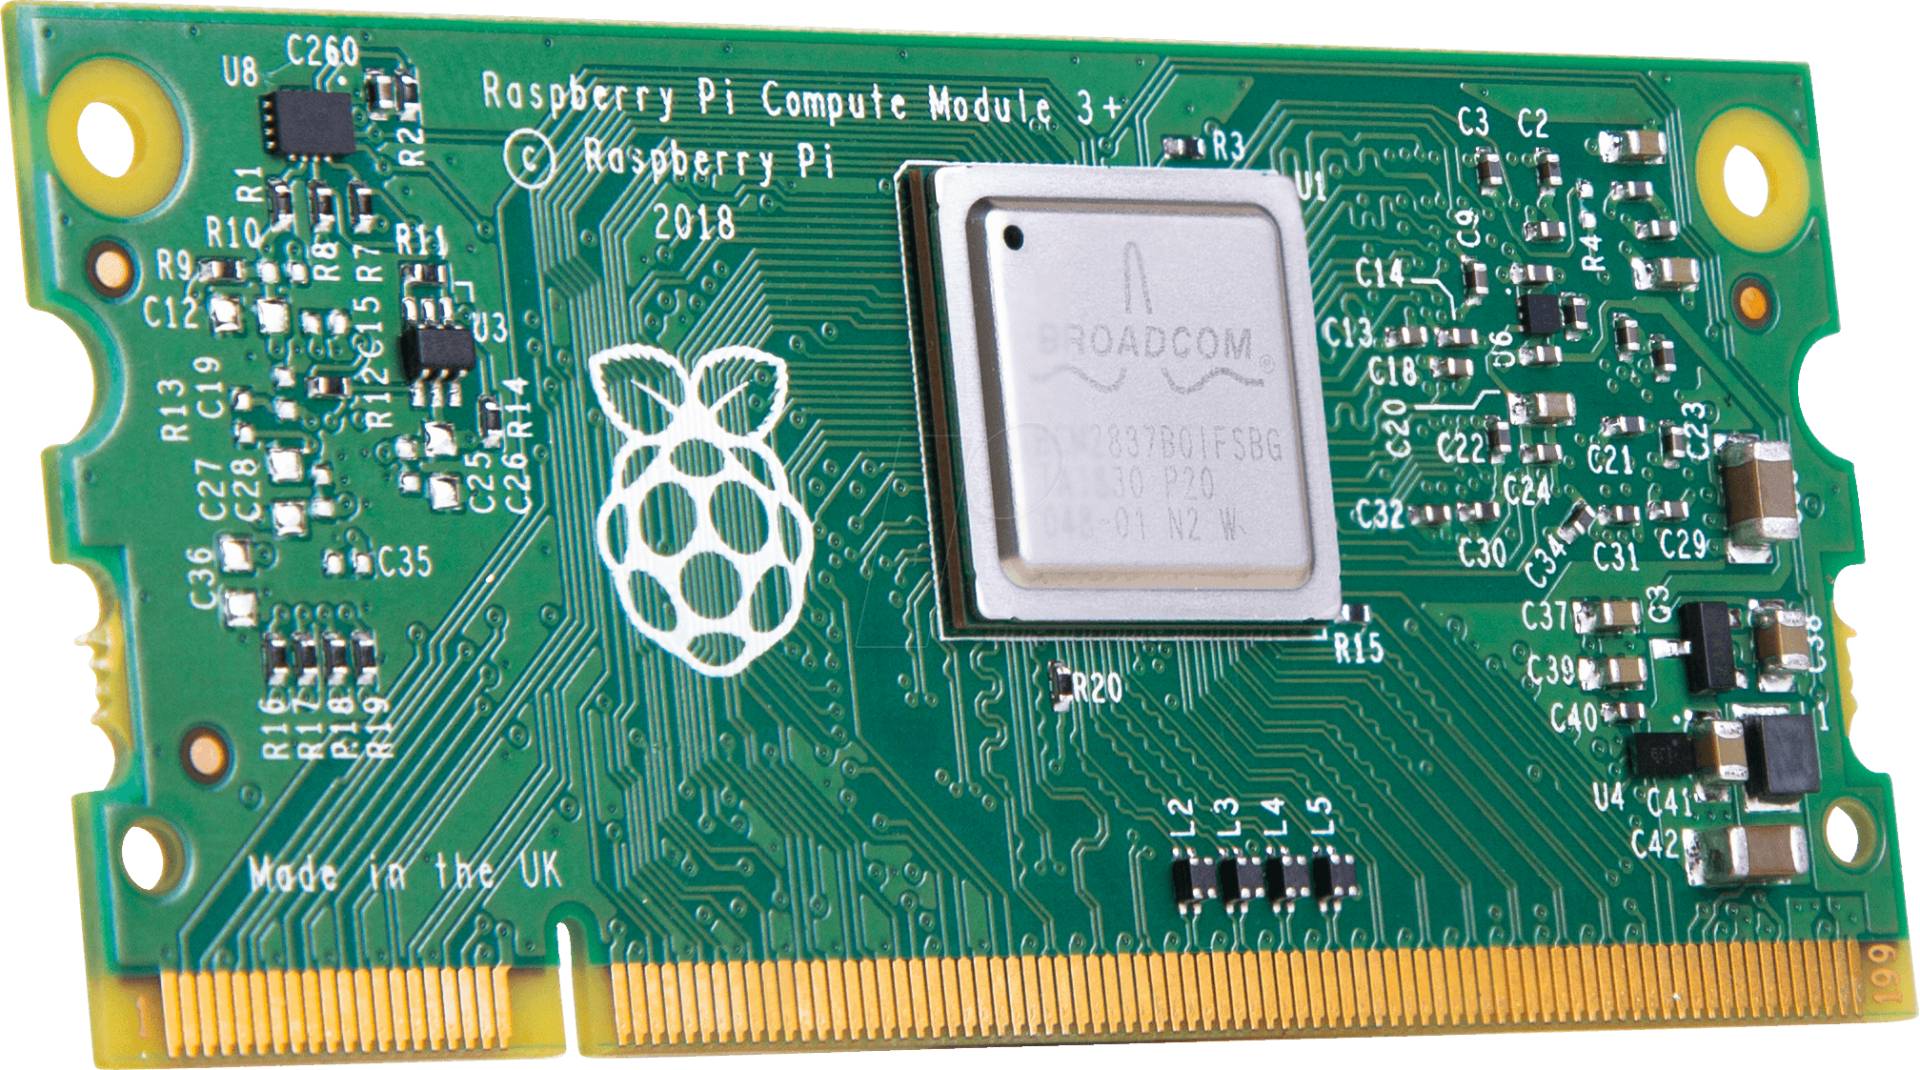 RASP CM 3+ 32GB - Raspberry Pi Compute Module 3+ 32 GB von Raspberry Pi